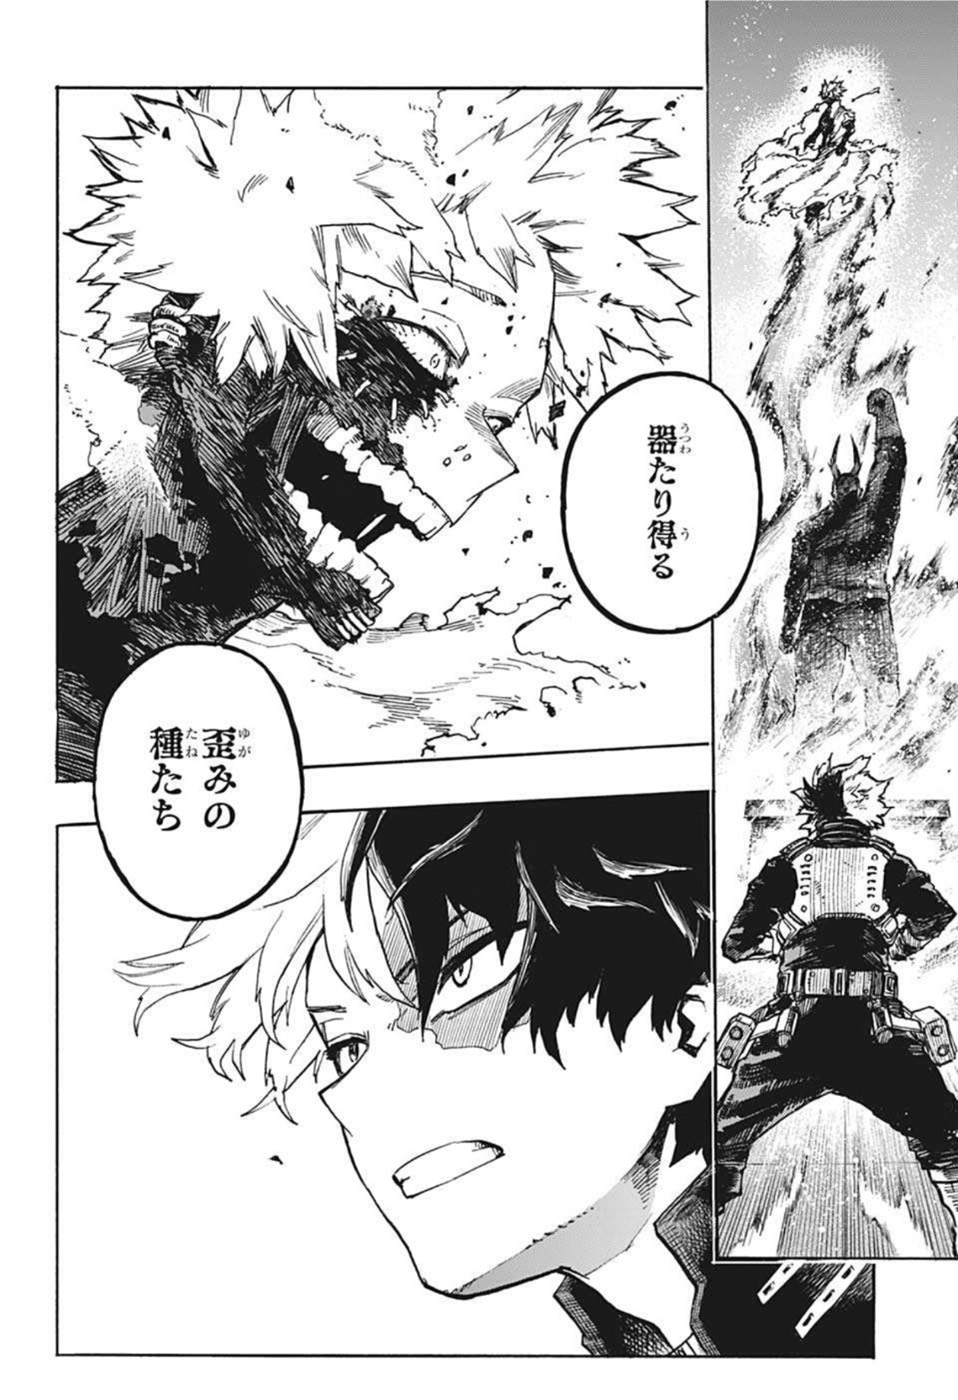 Boku no Hero Academia - Chapter 350 - Page 2